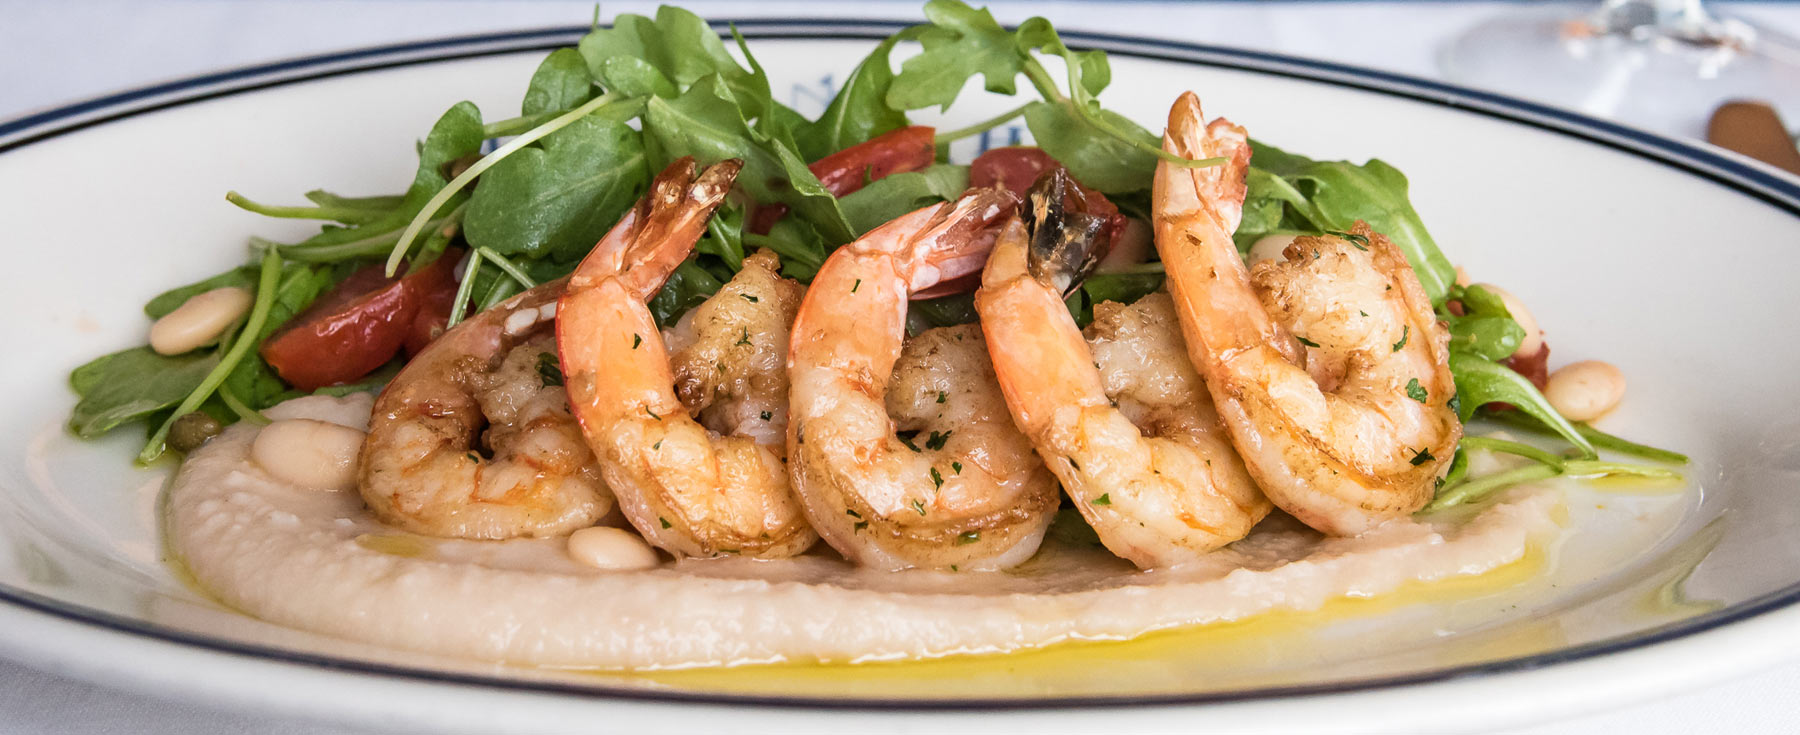 HH-shrimp-with-beans-menu-img.jpg